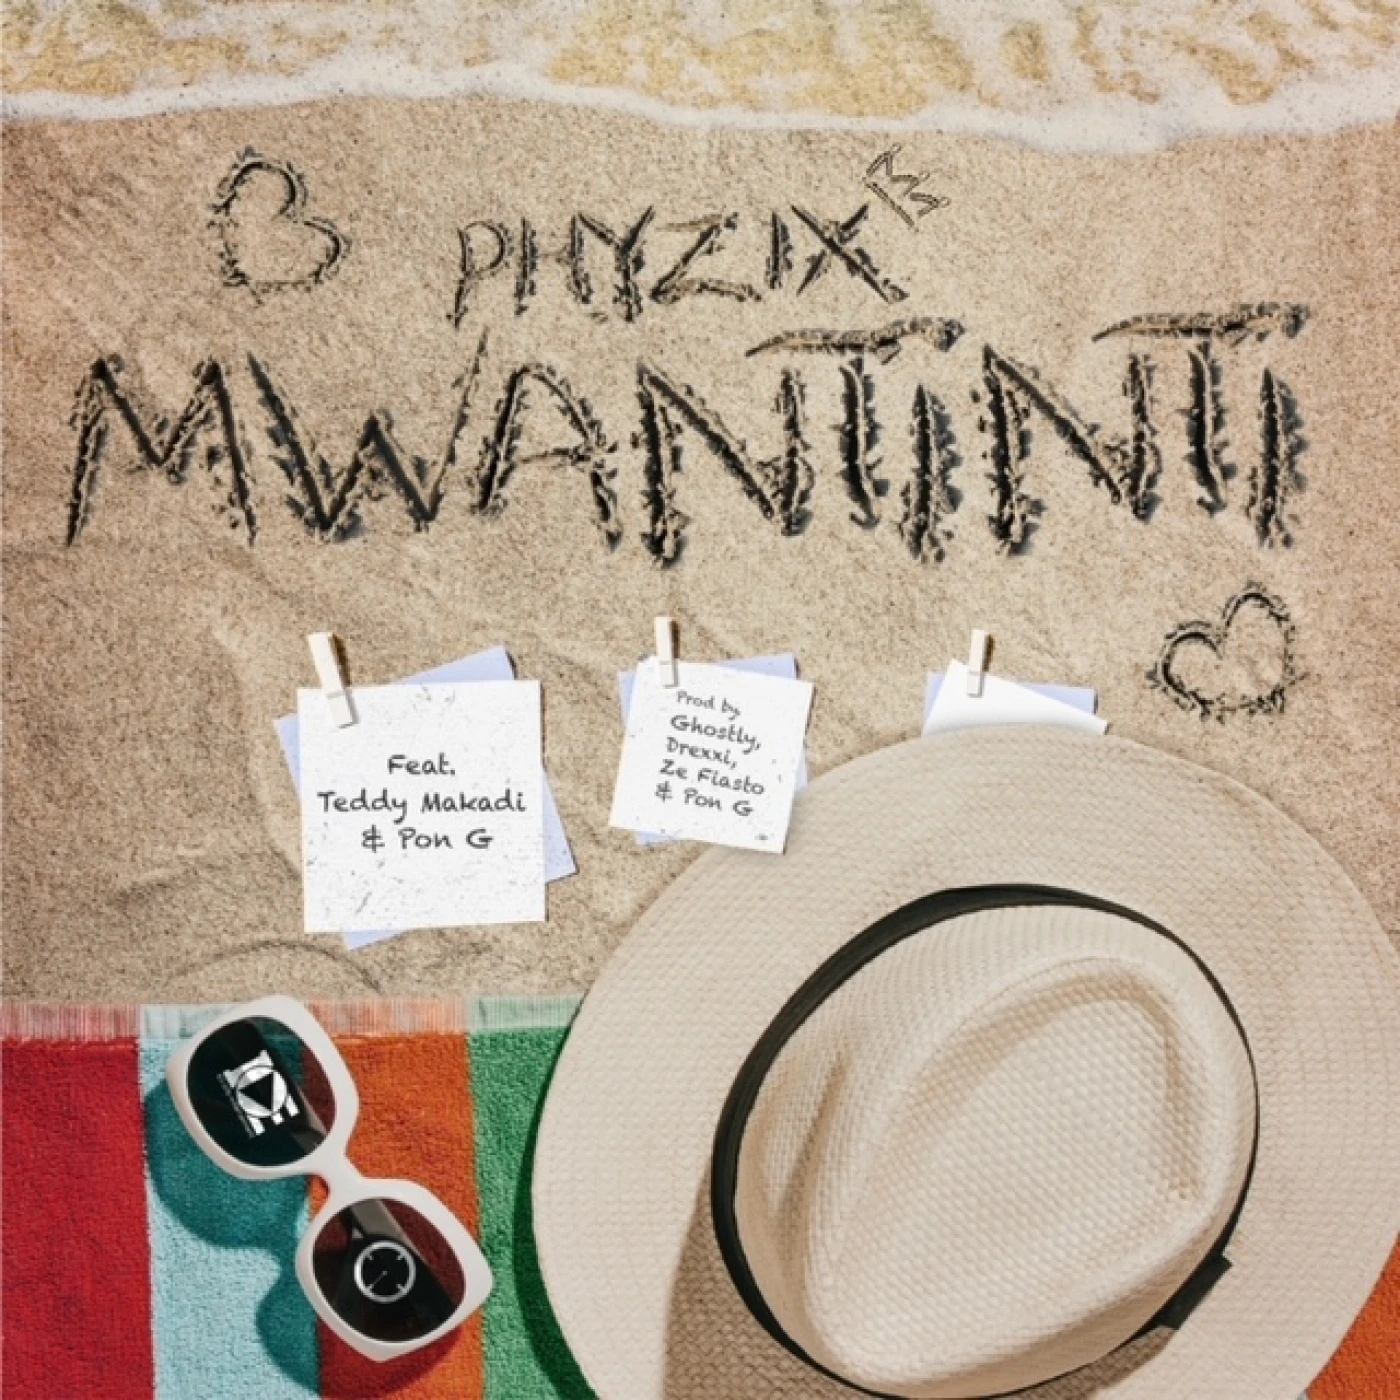 mwantinti-feat-teddy-makadi-pon-g-phyzix